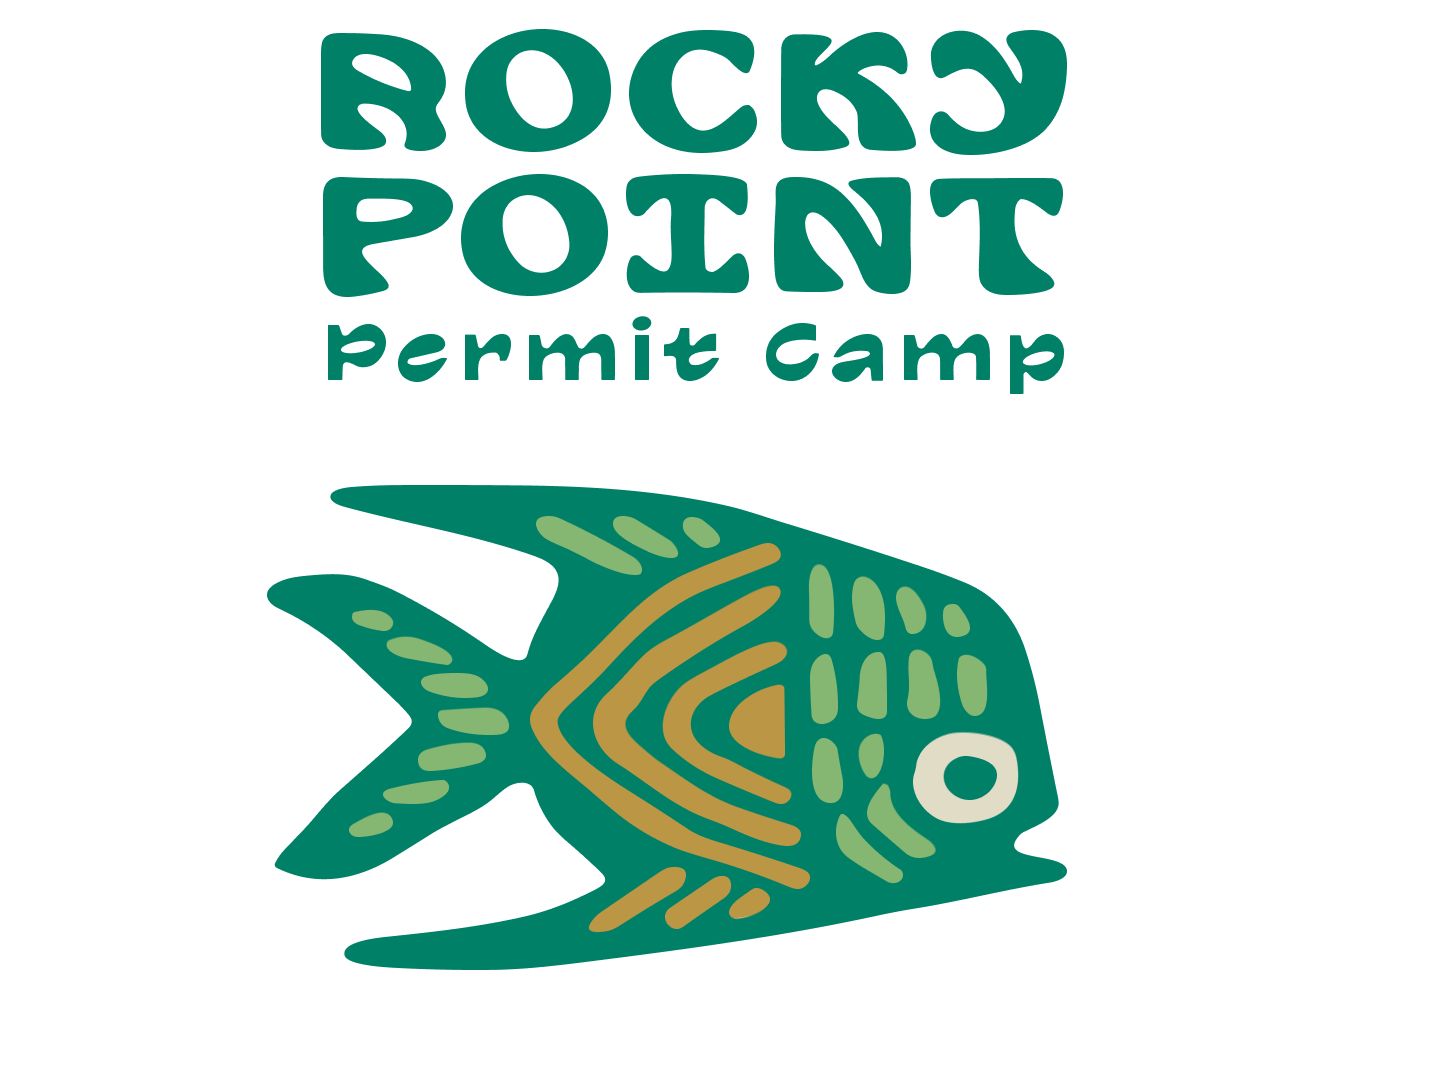 rocky point